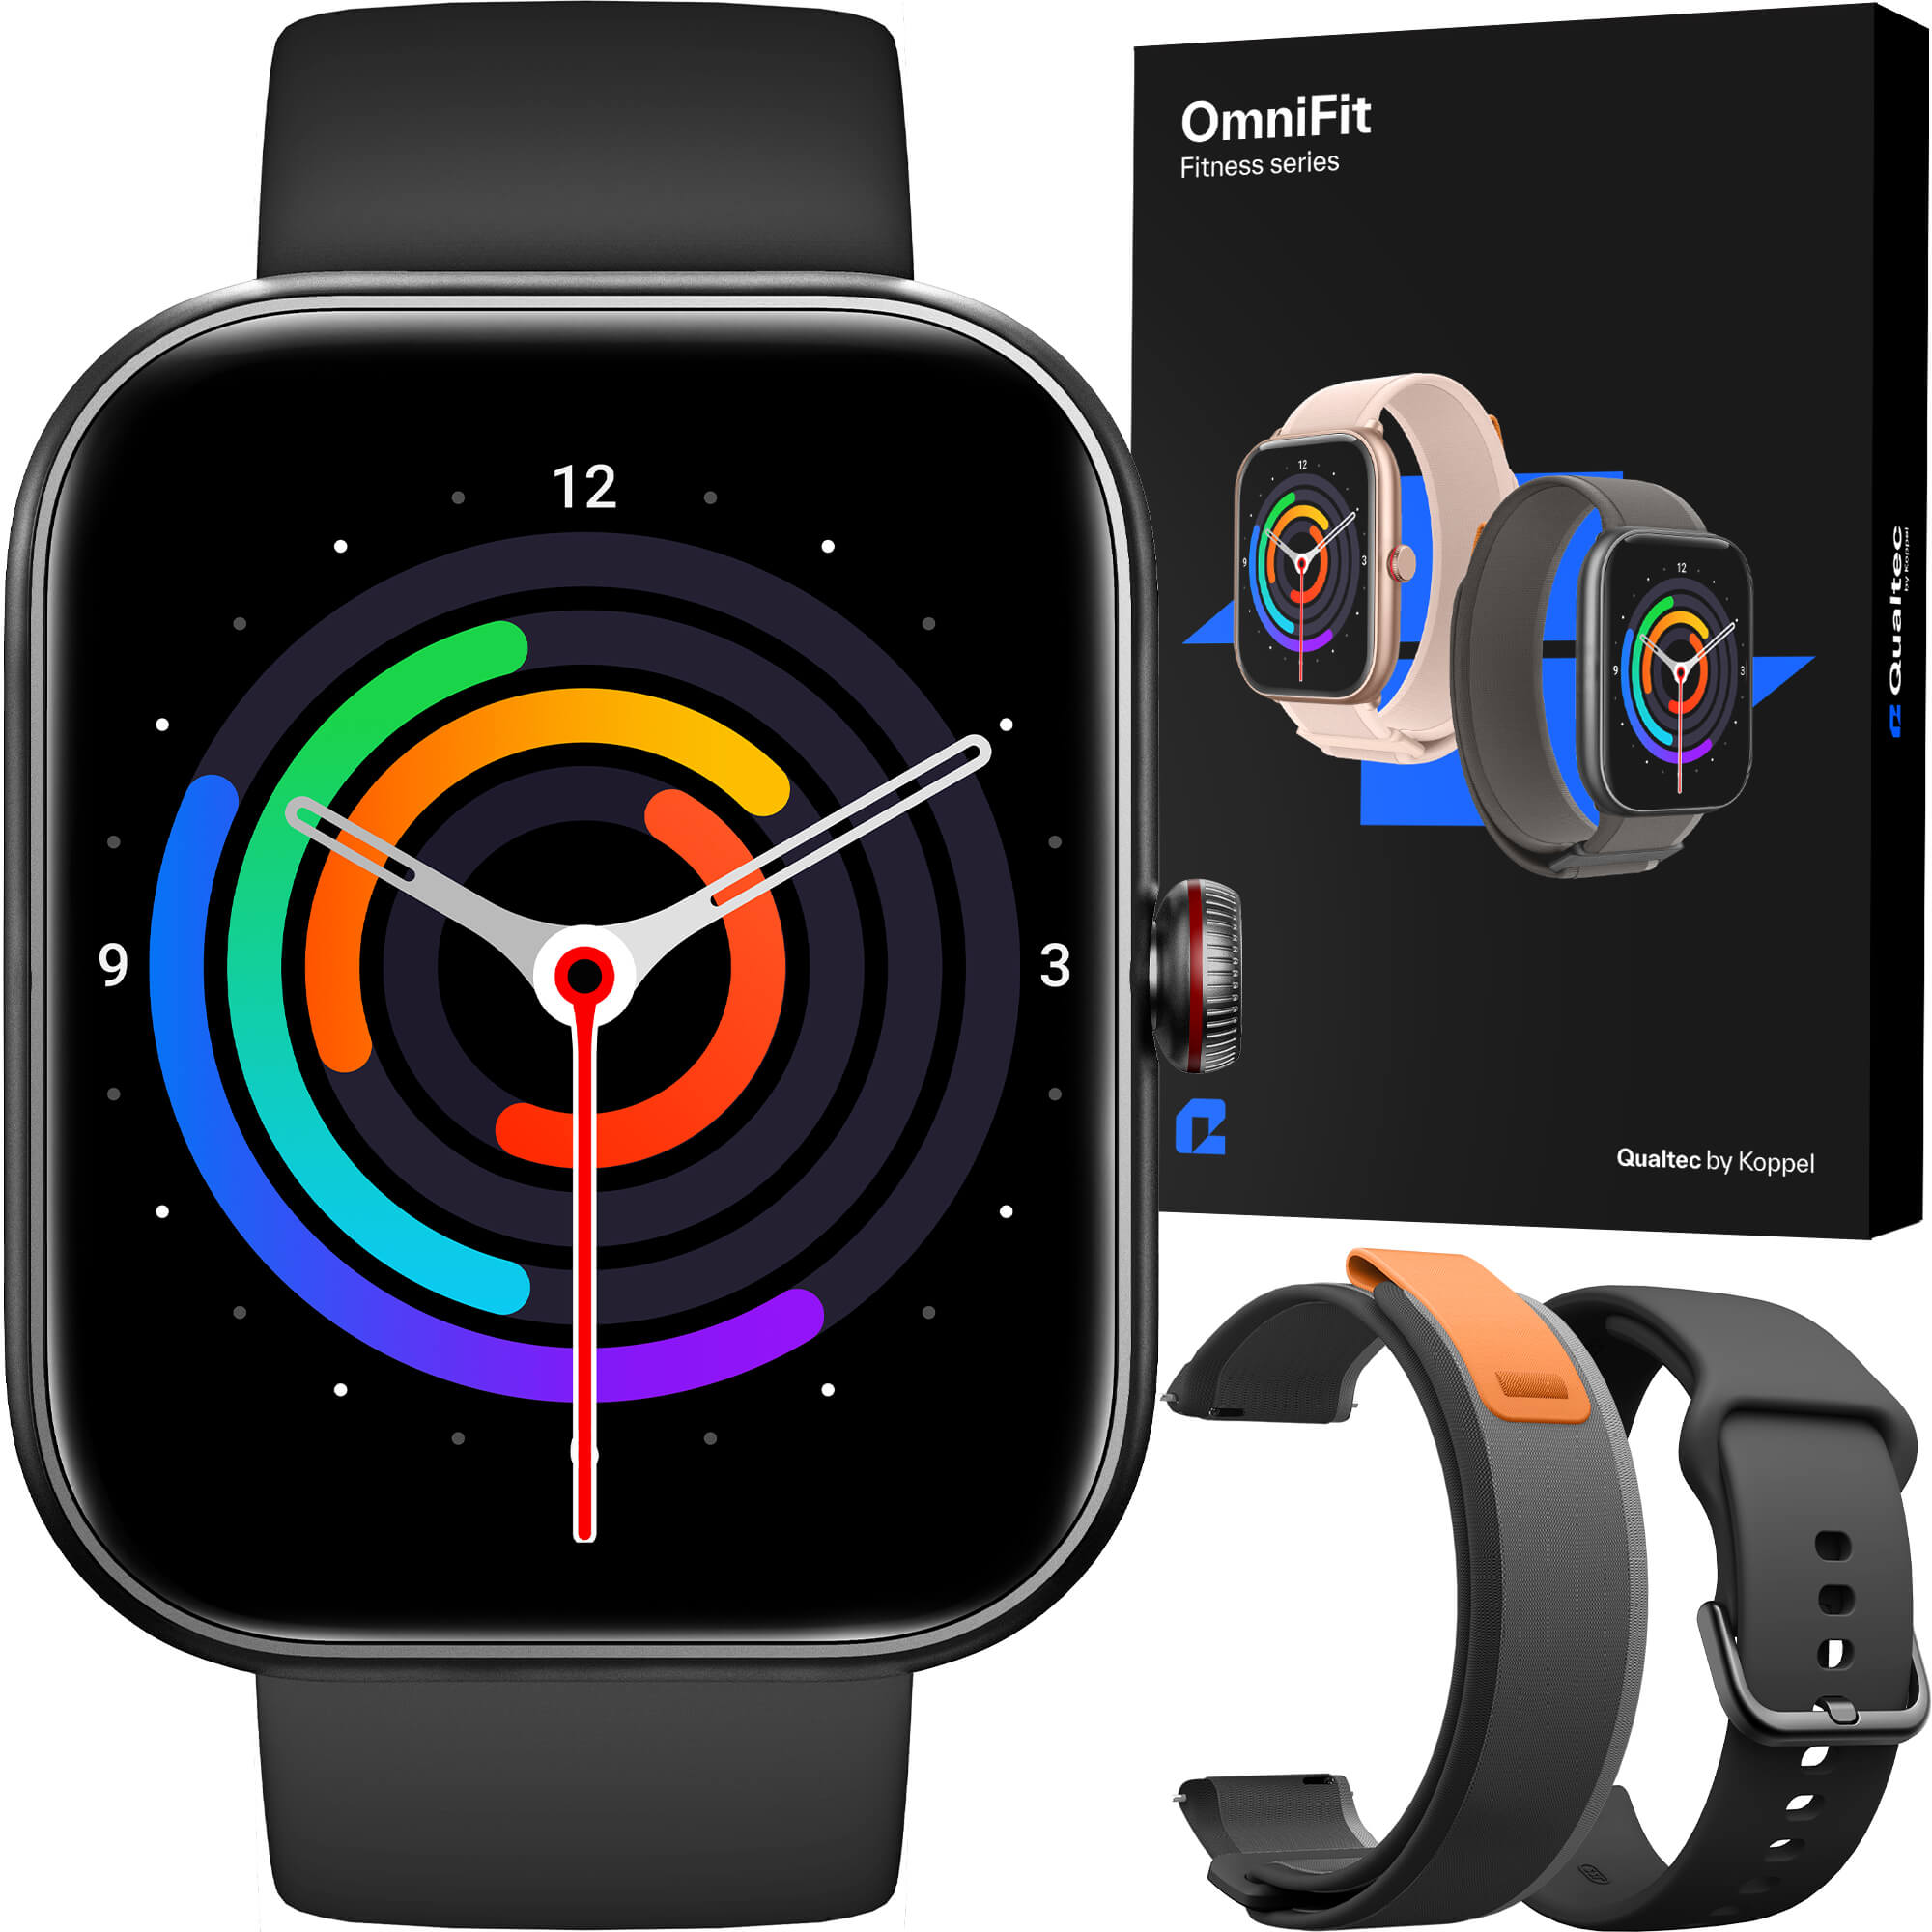 ceas smartwatch fitness series qualtec by koppel omnifit